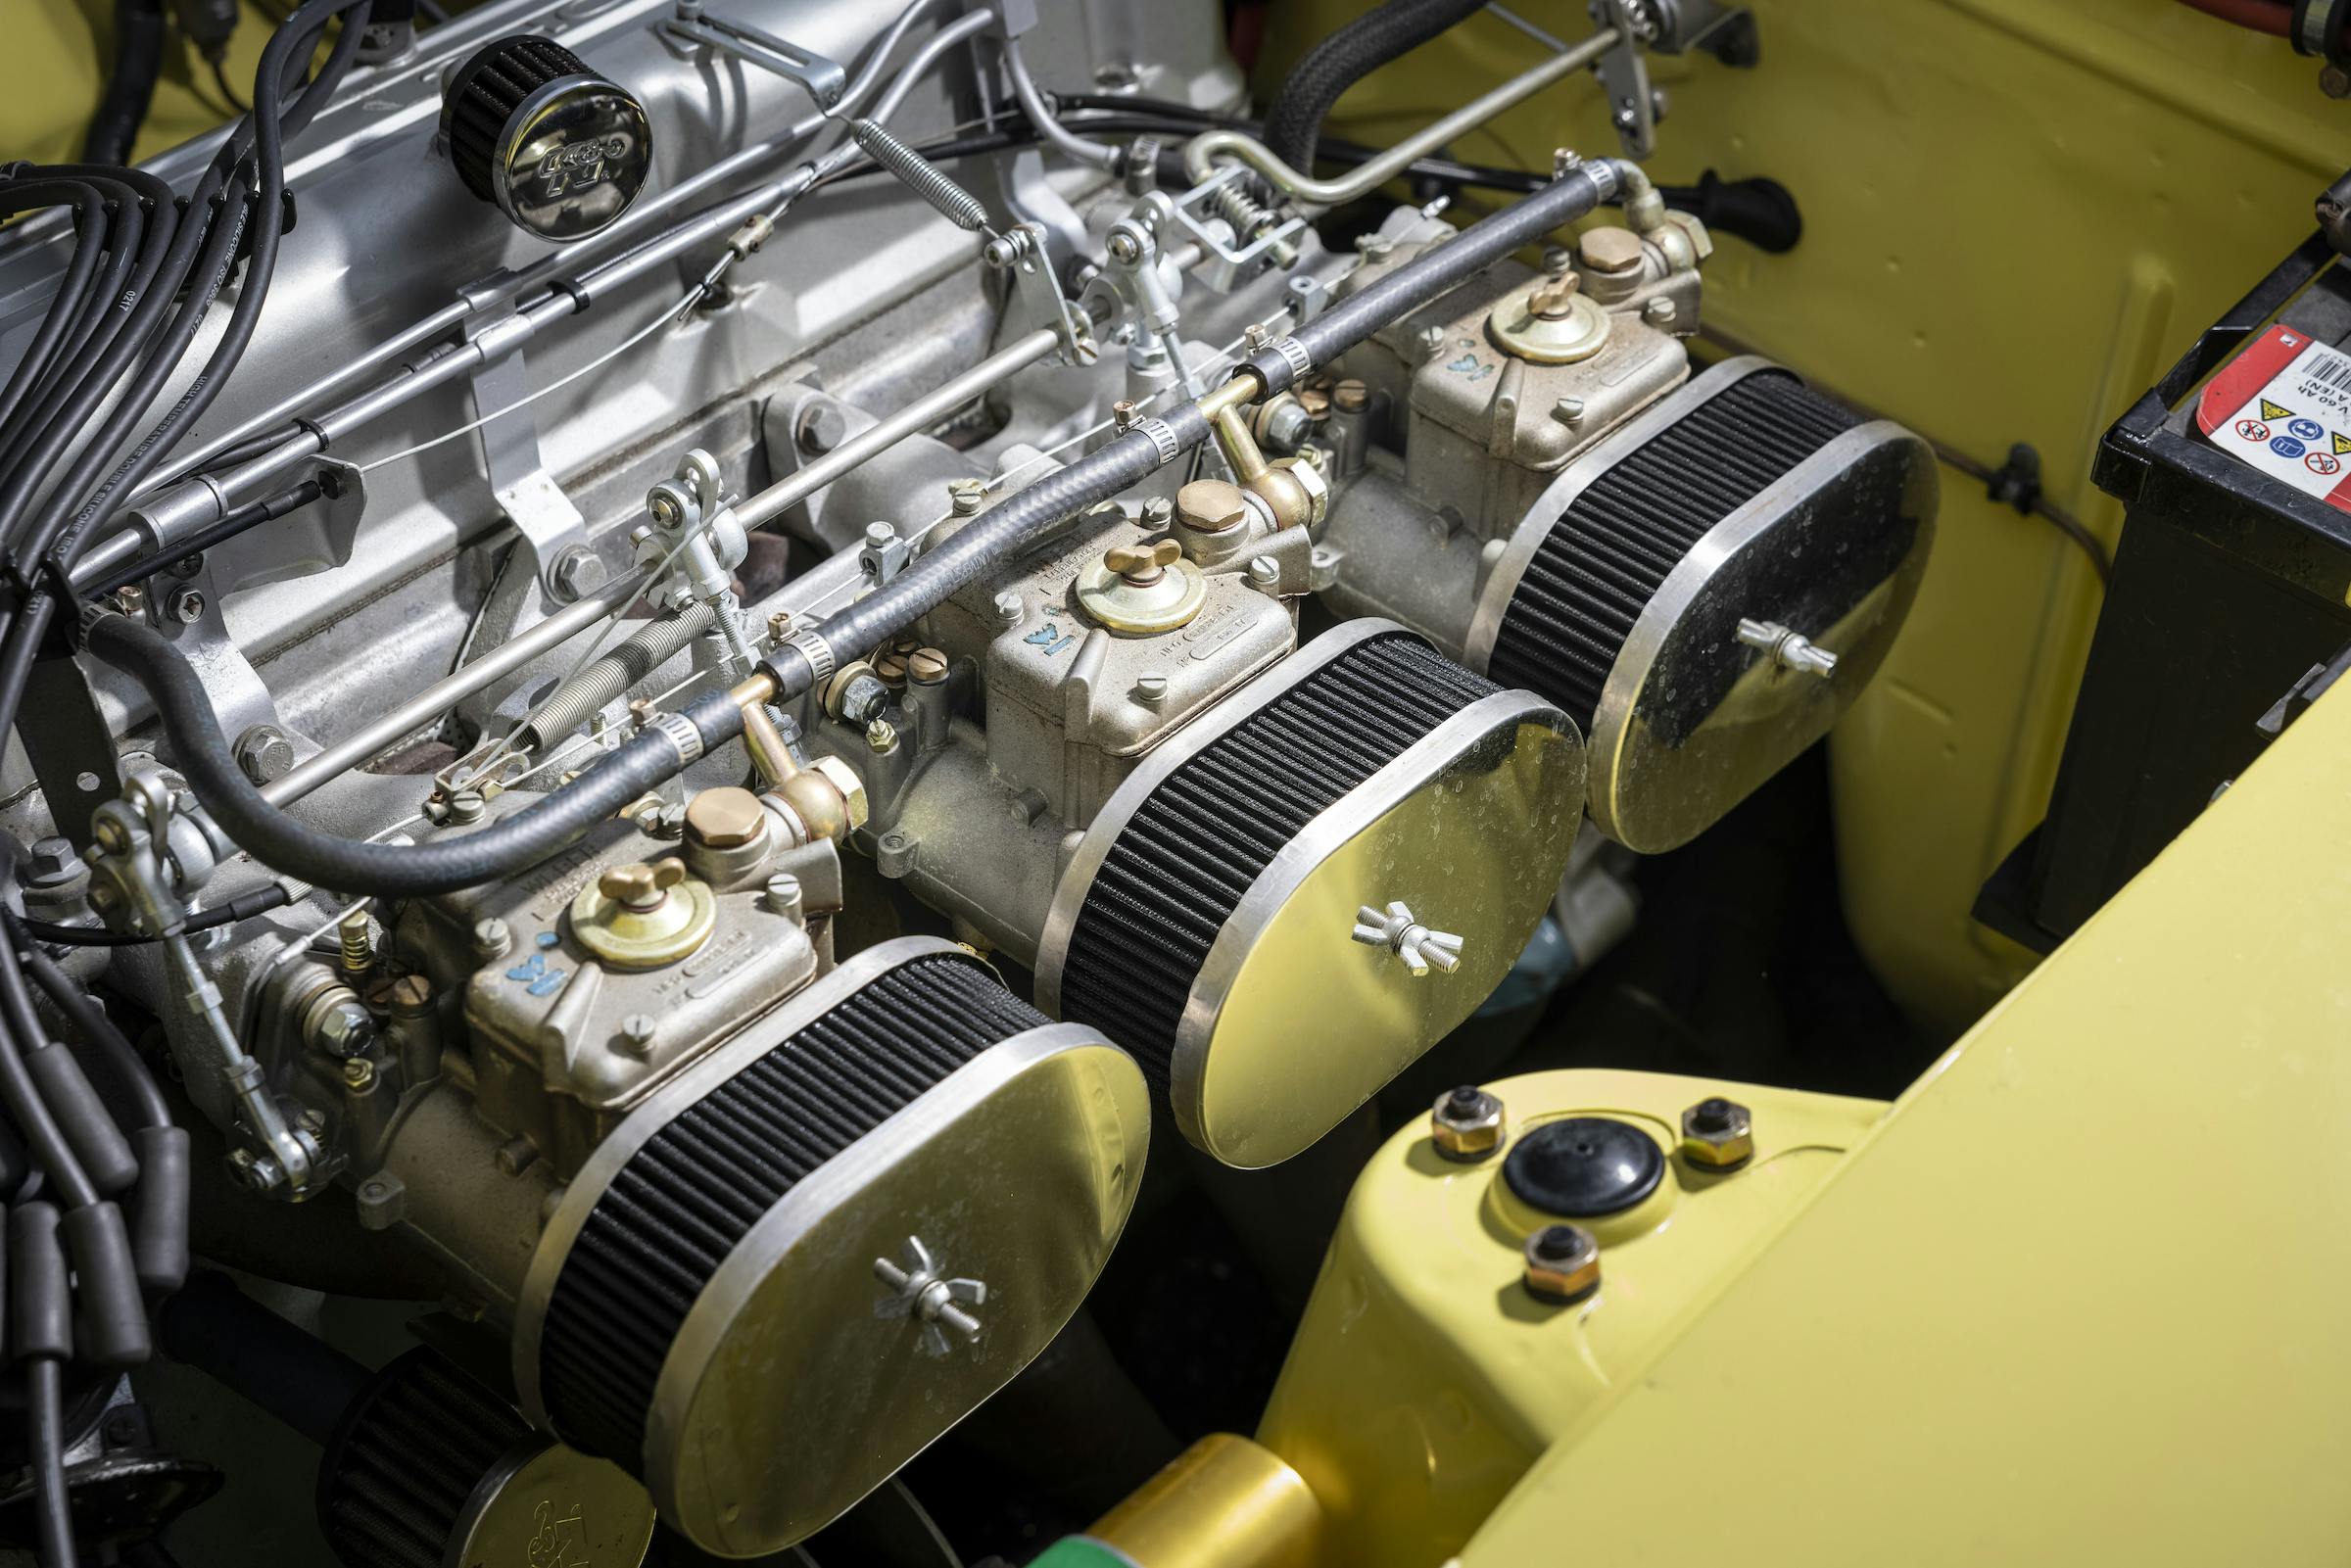 Datsun 240Z engine carbs closeup